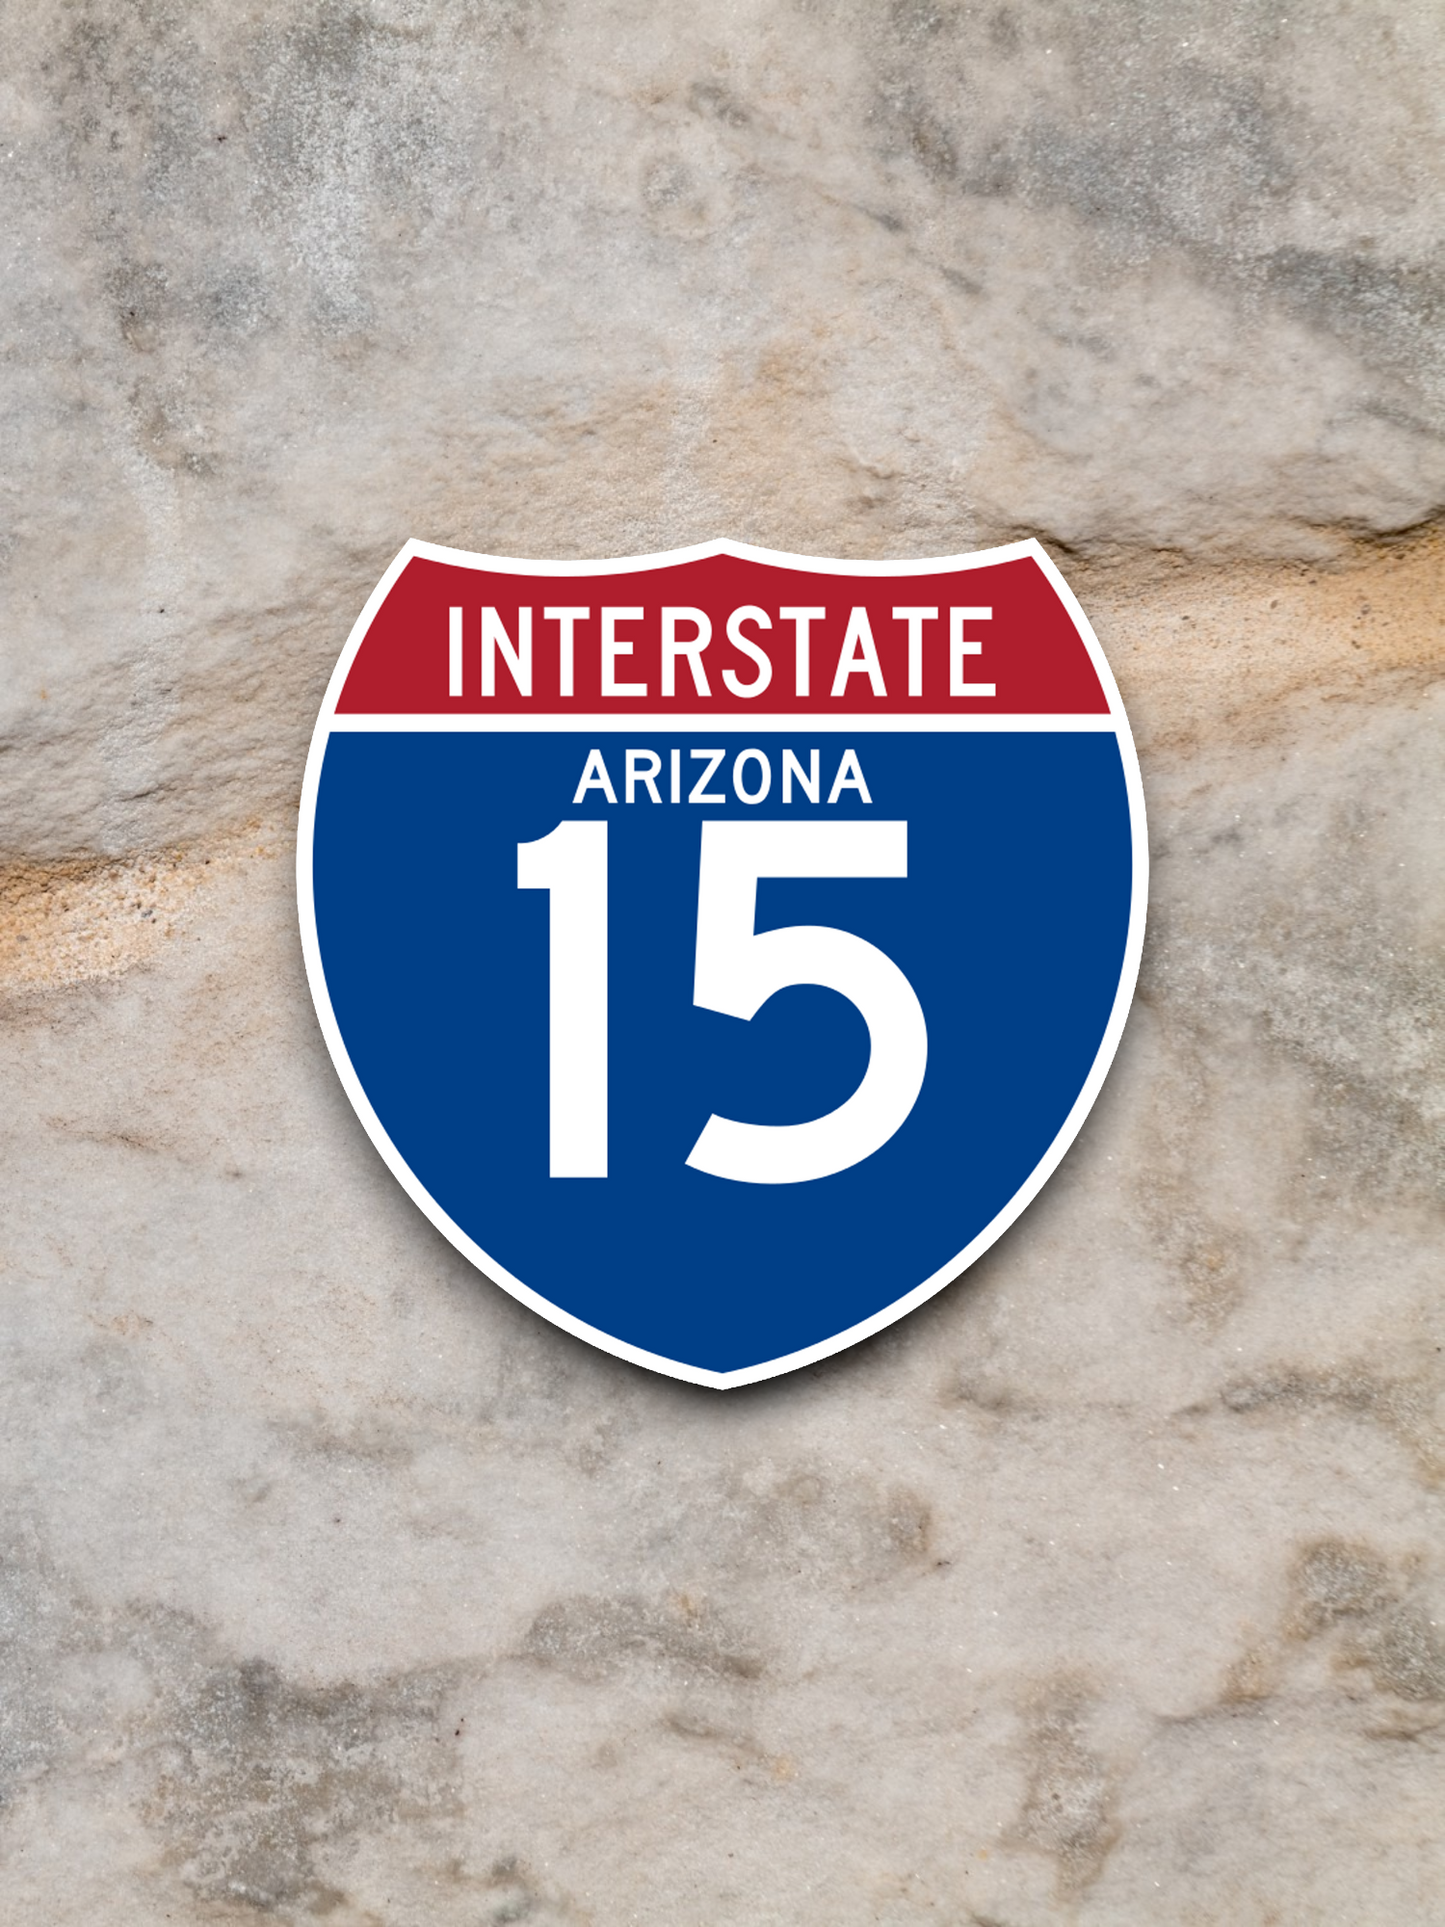 Interstate I-15 - Arizona - Road Sign Sticker